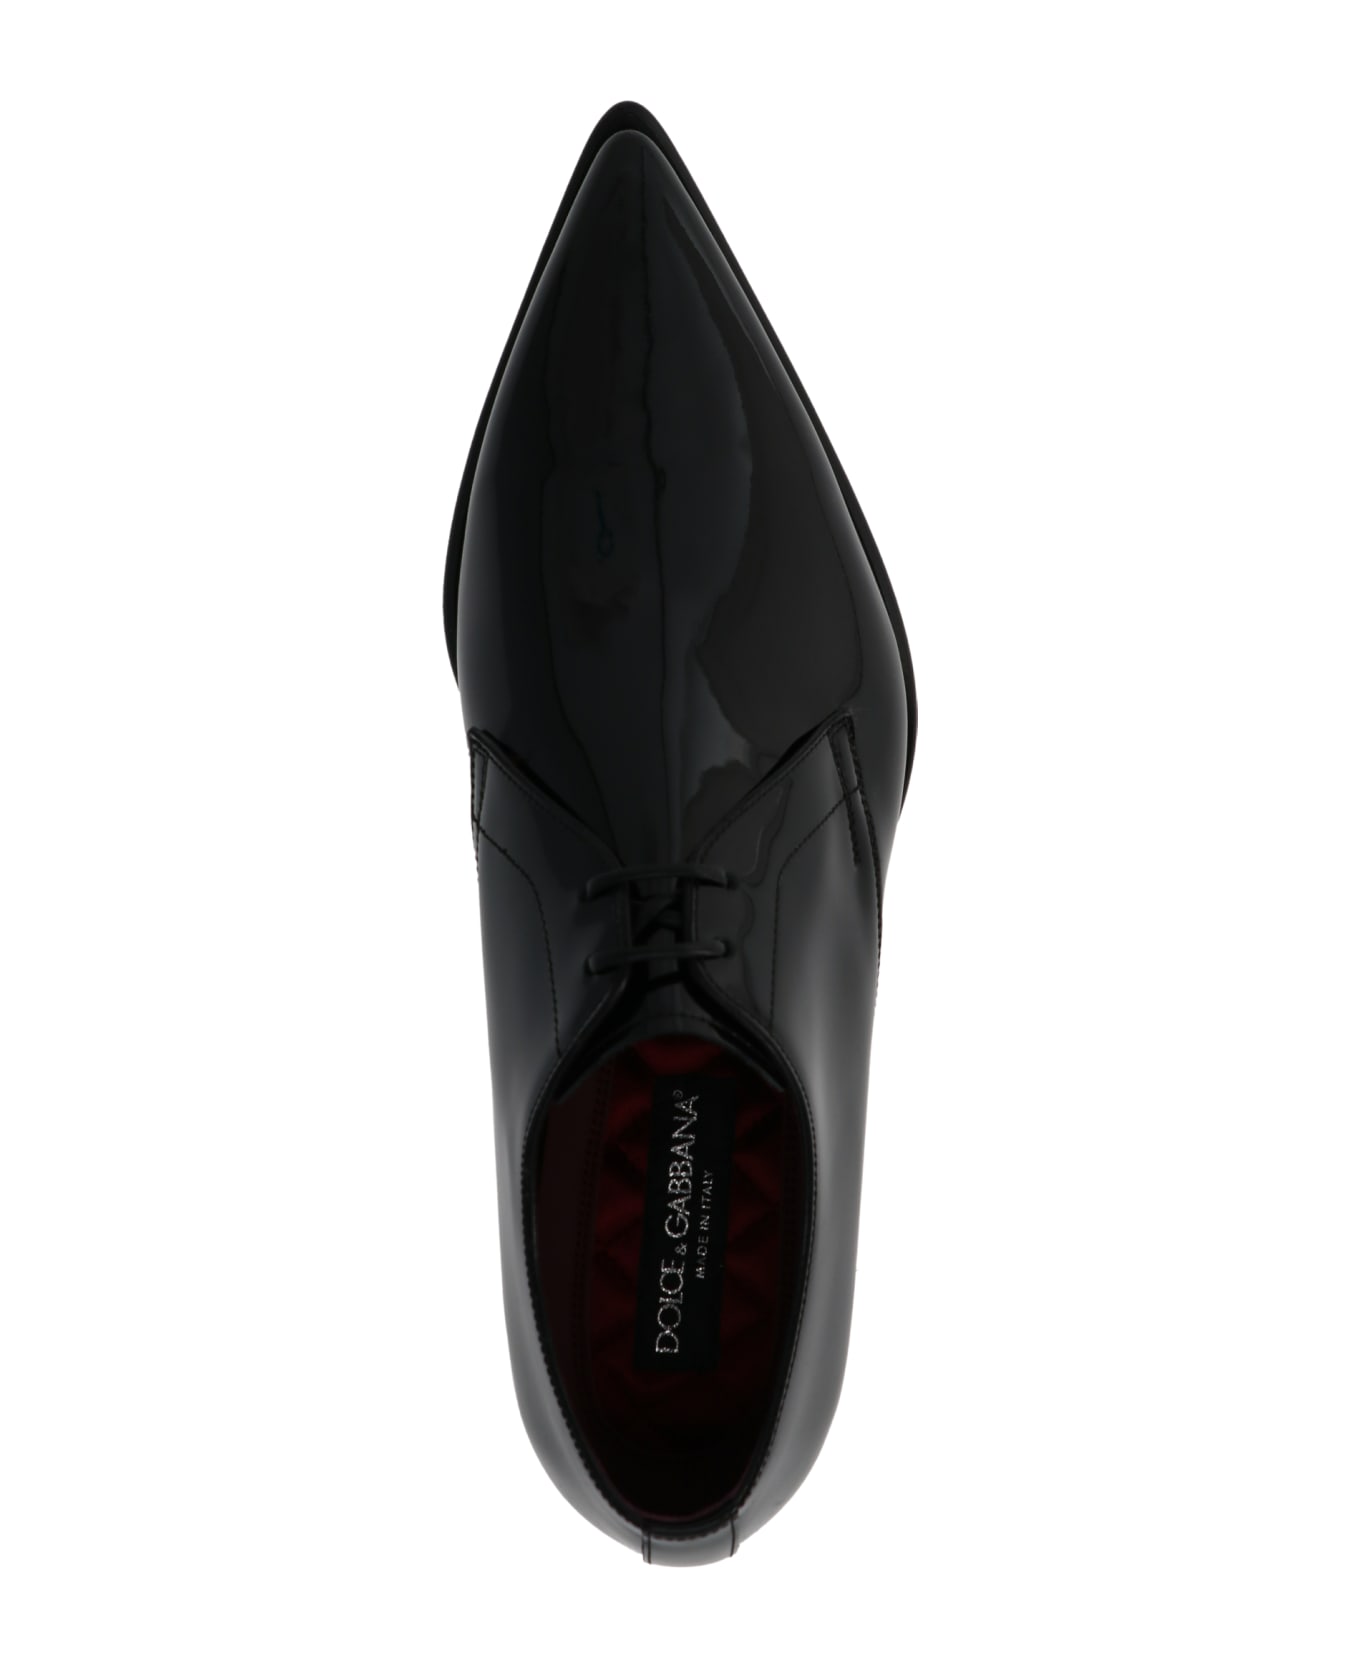 Dolce & Gabbana 'achille' Derby Shoes - Black  